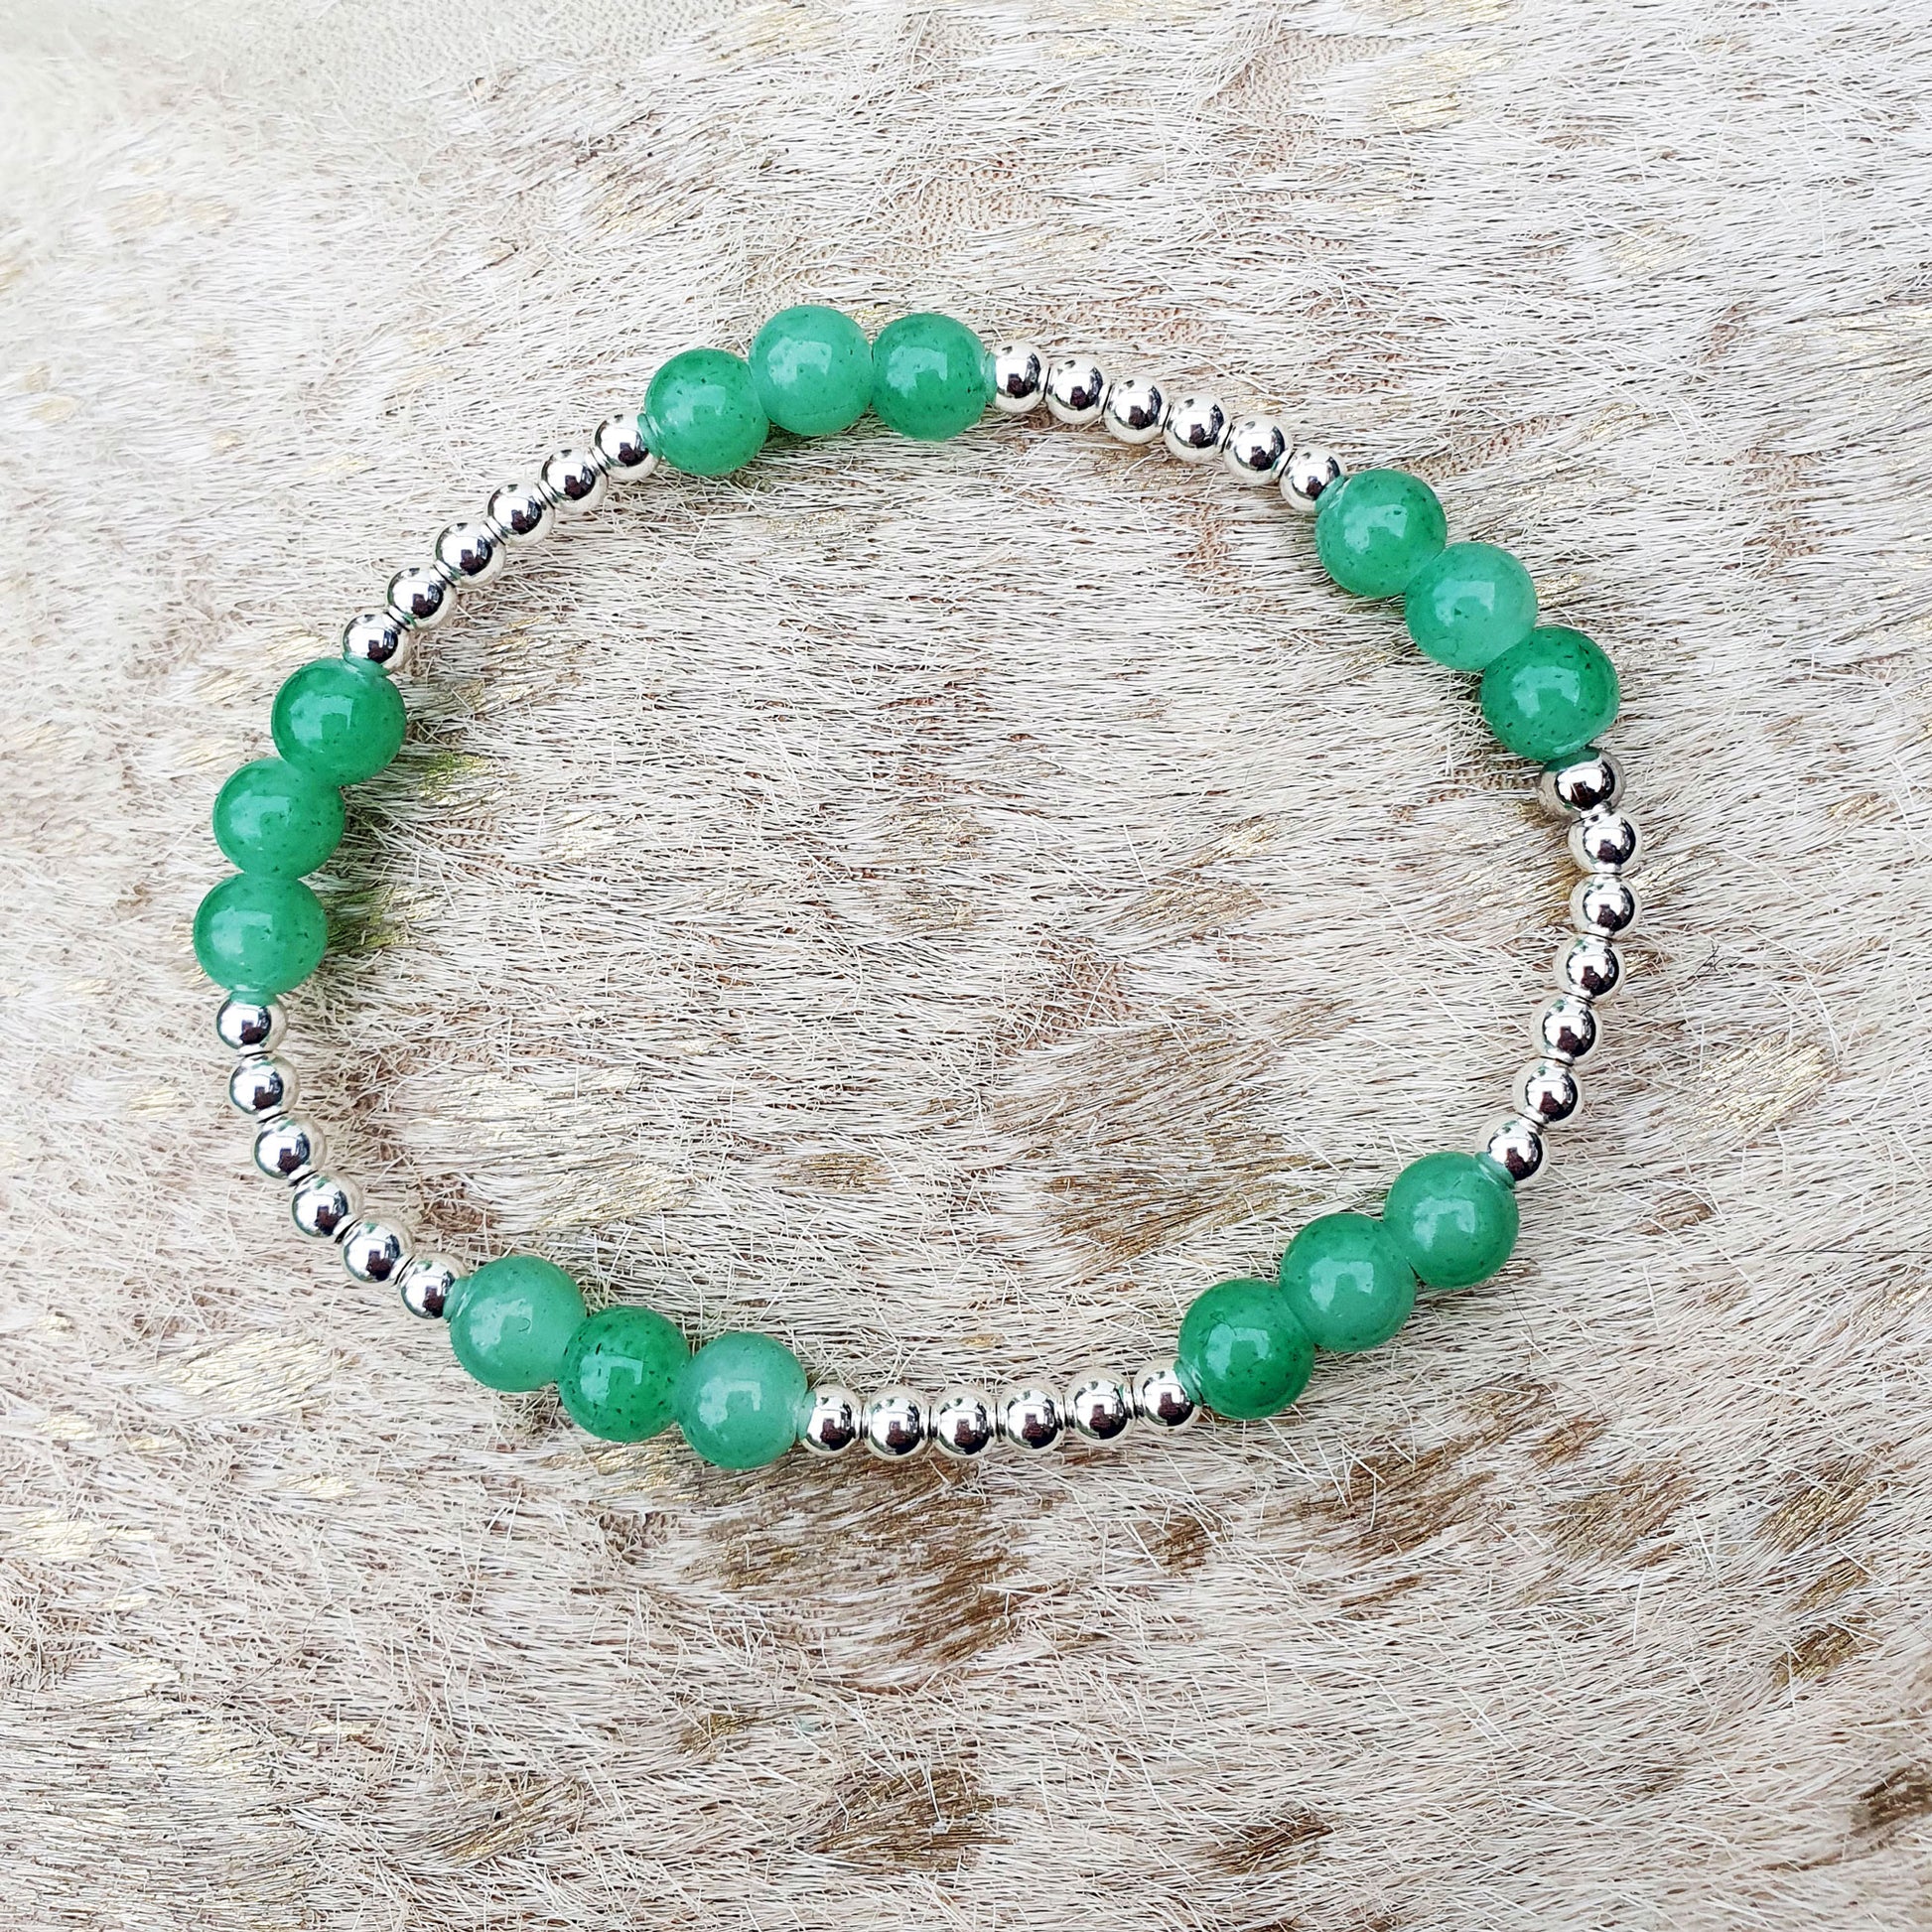 Green agate inset bracelet